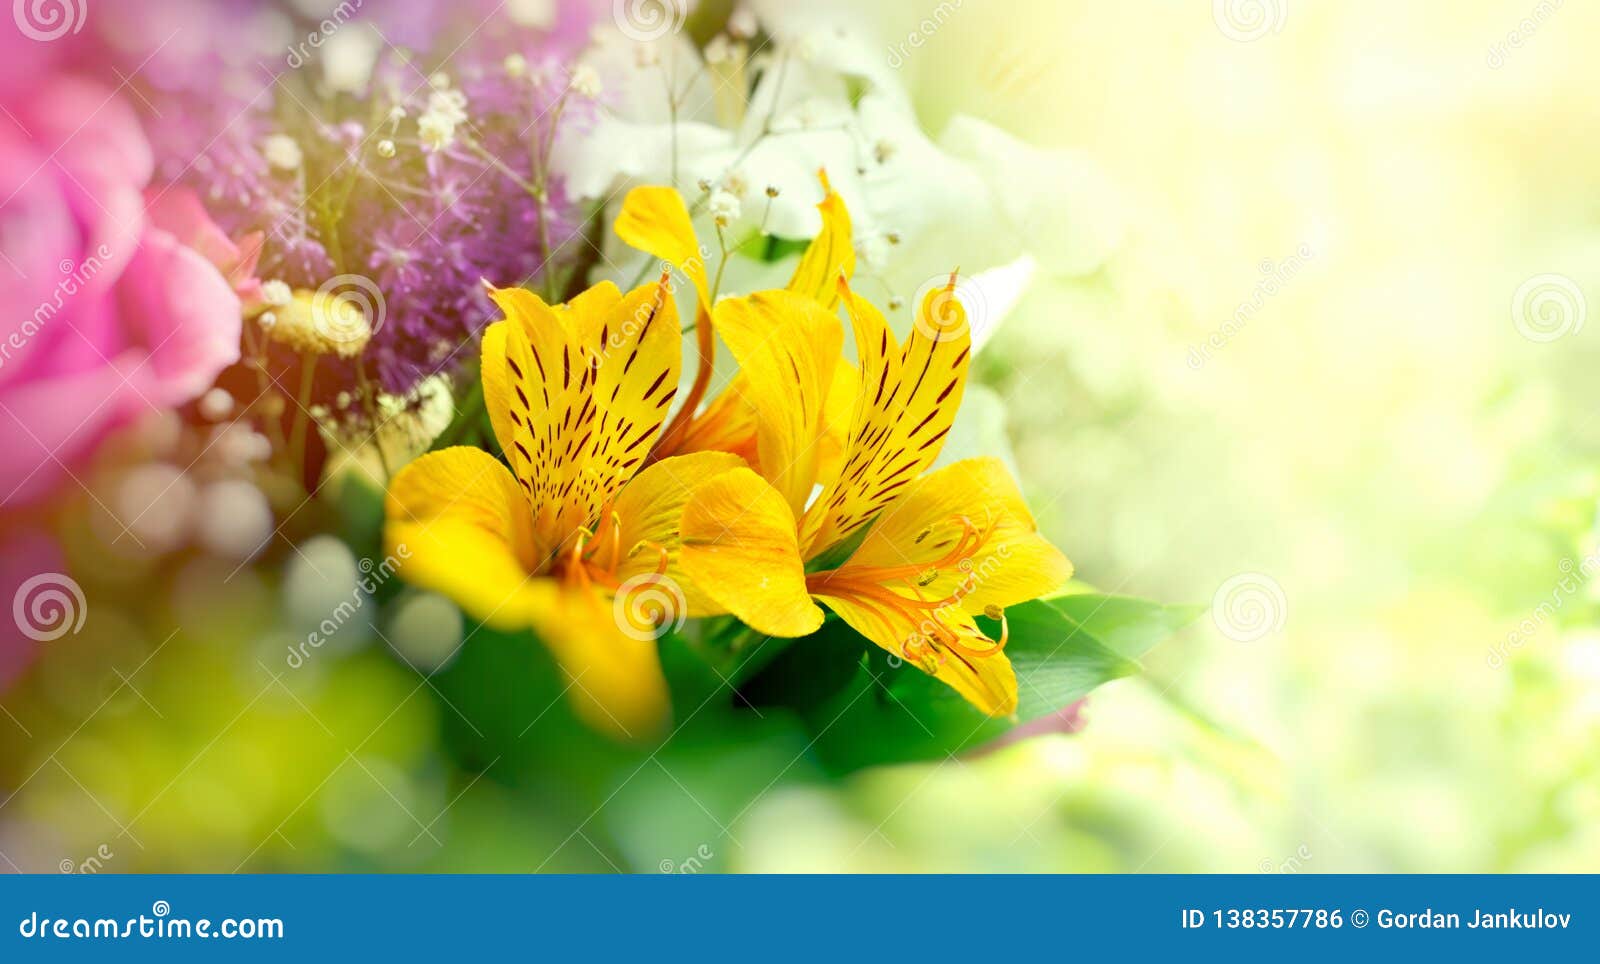 bouquet of flowers, beautiful flower - floral arrangement